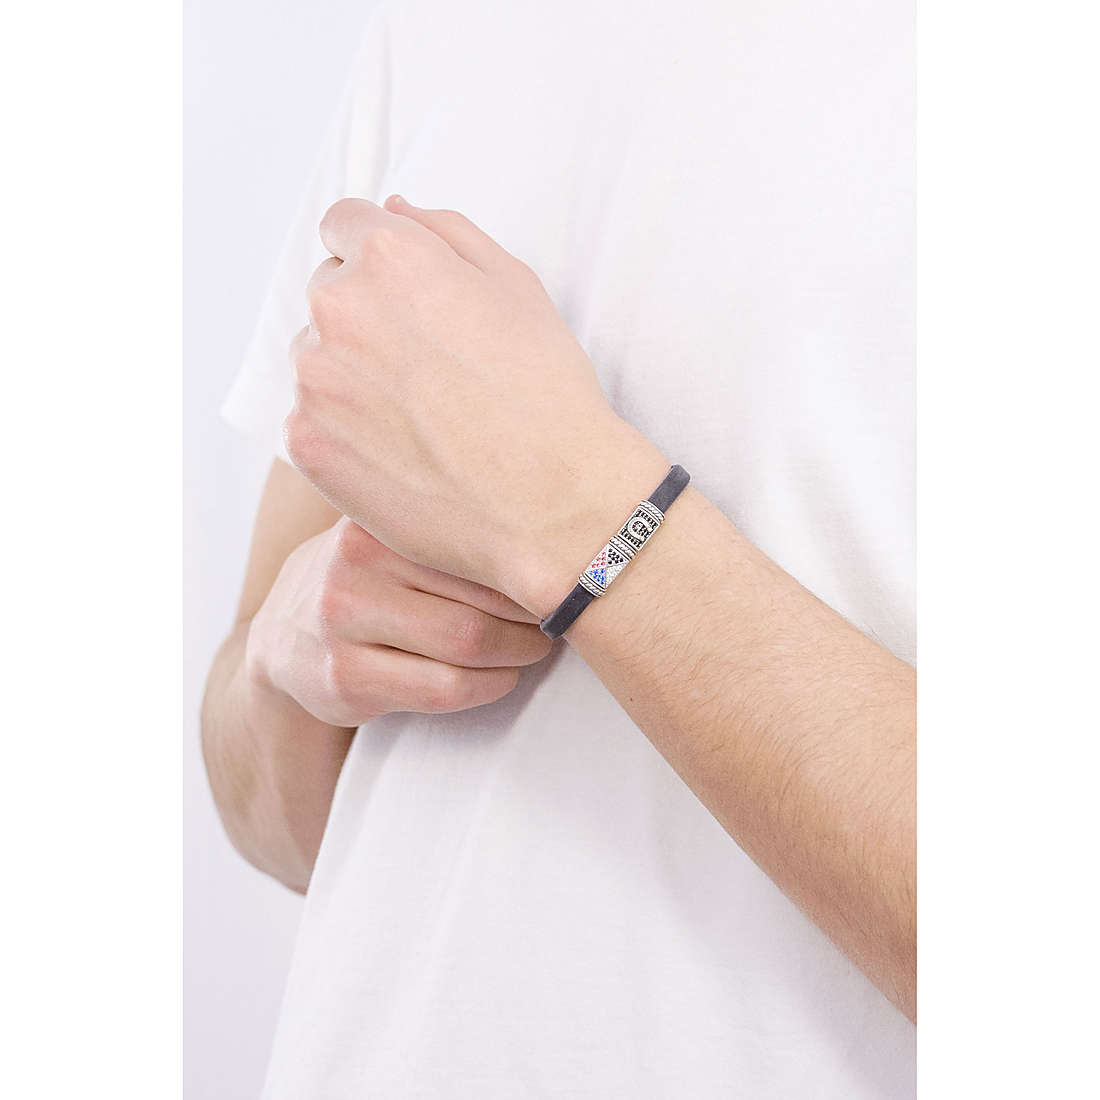 Cesare Paciotti bracelets Symbol Fantasy man JPNC1889M3 wearing